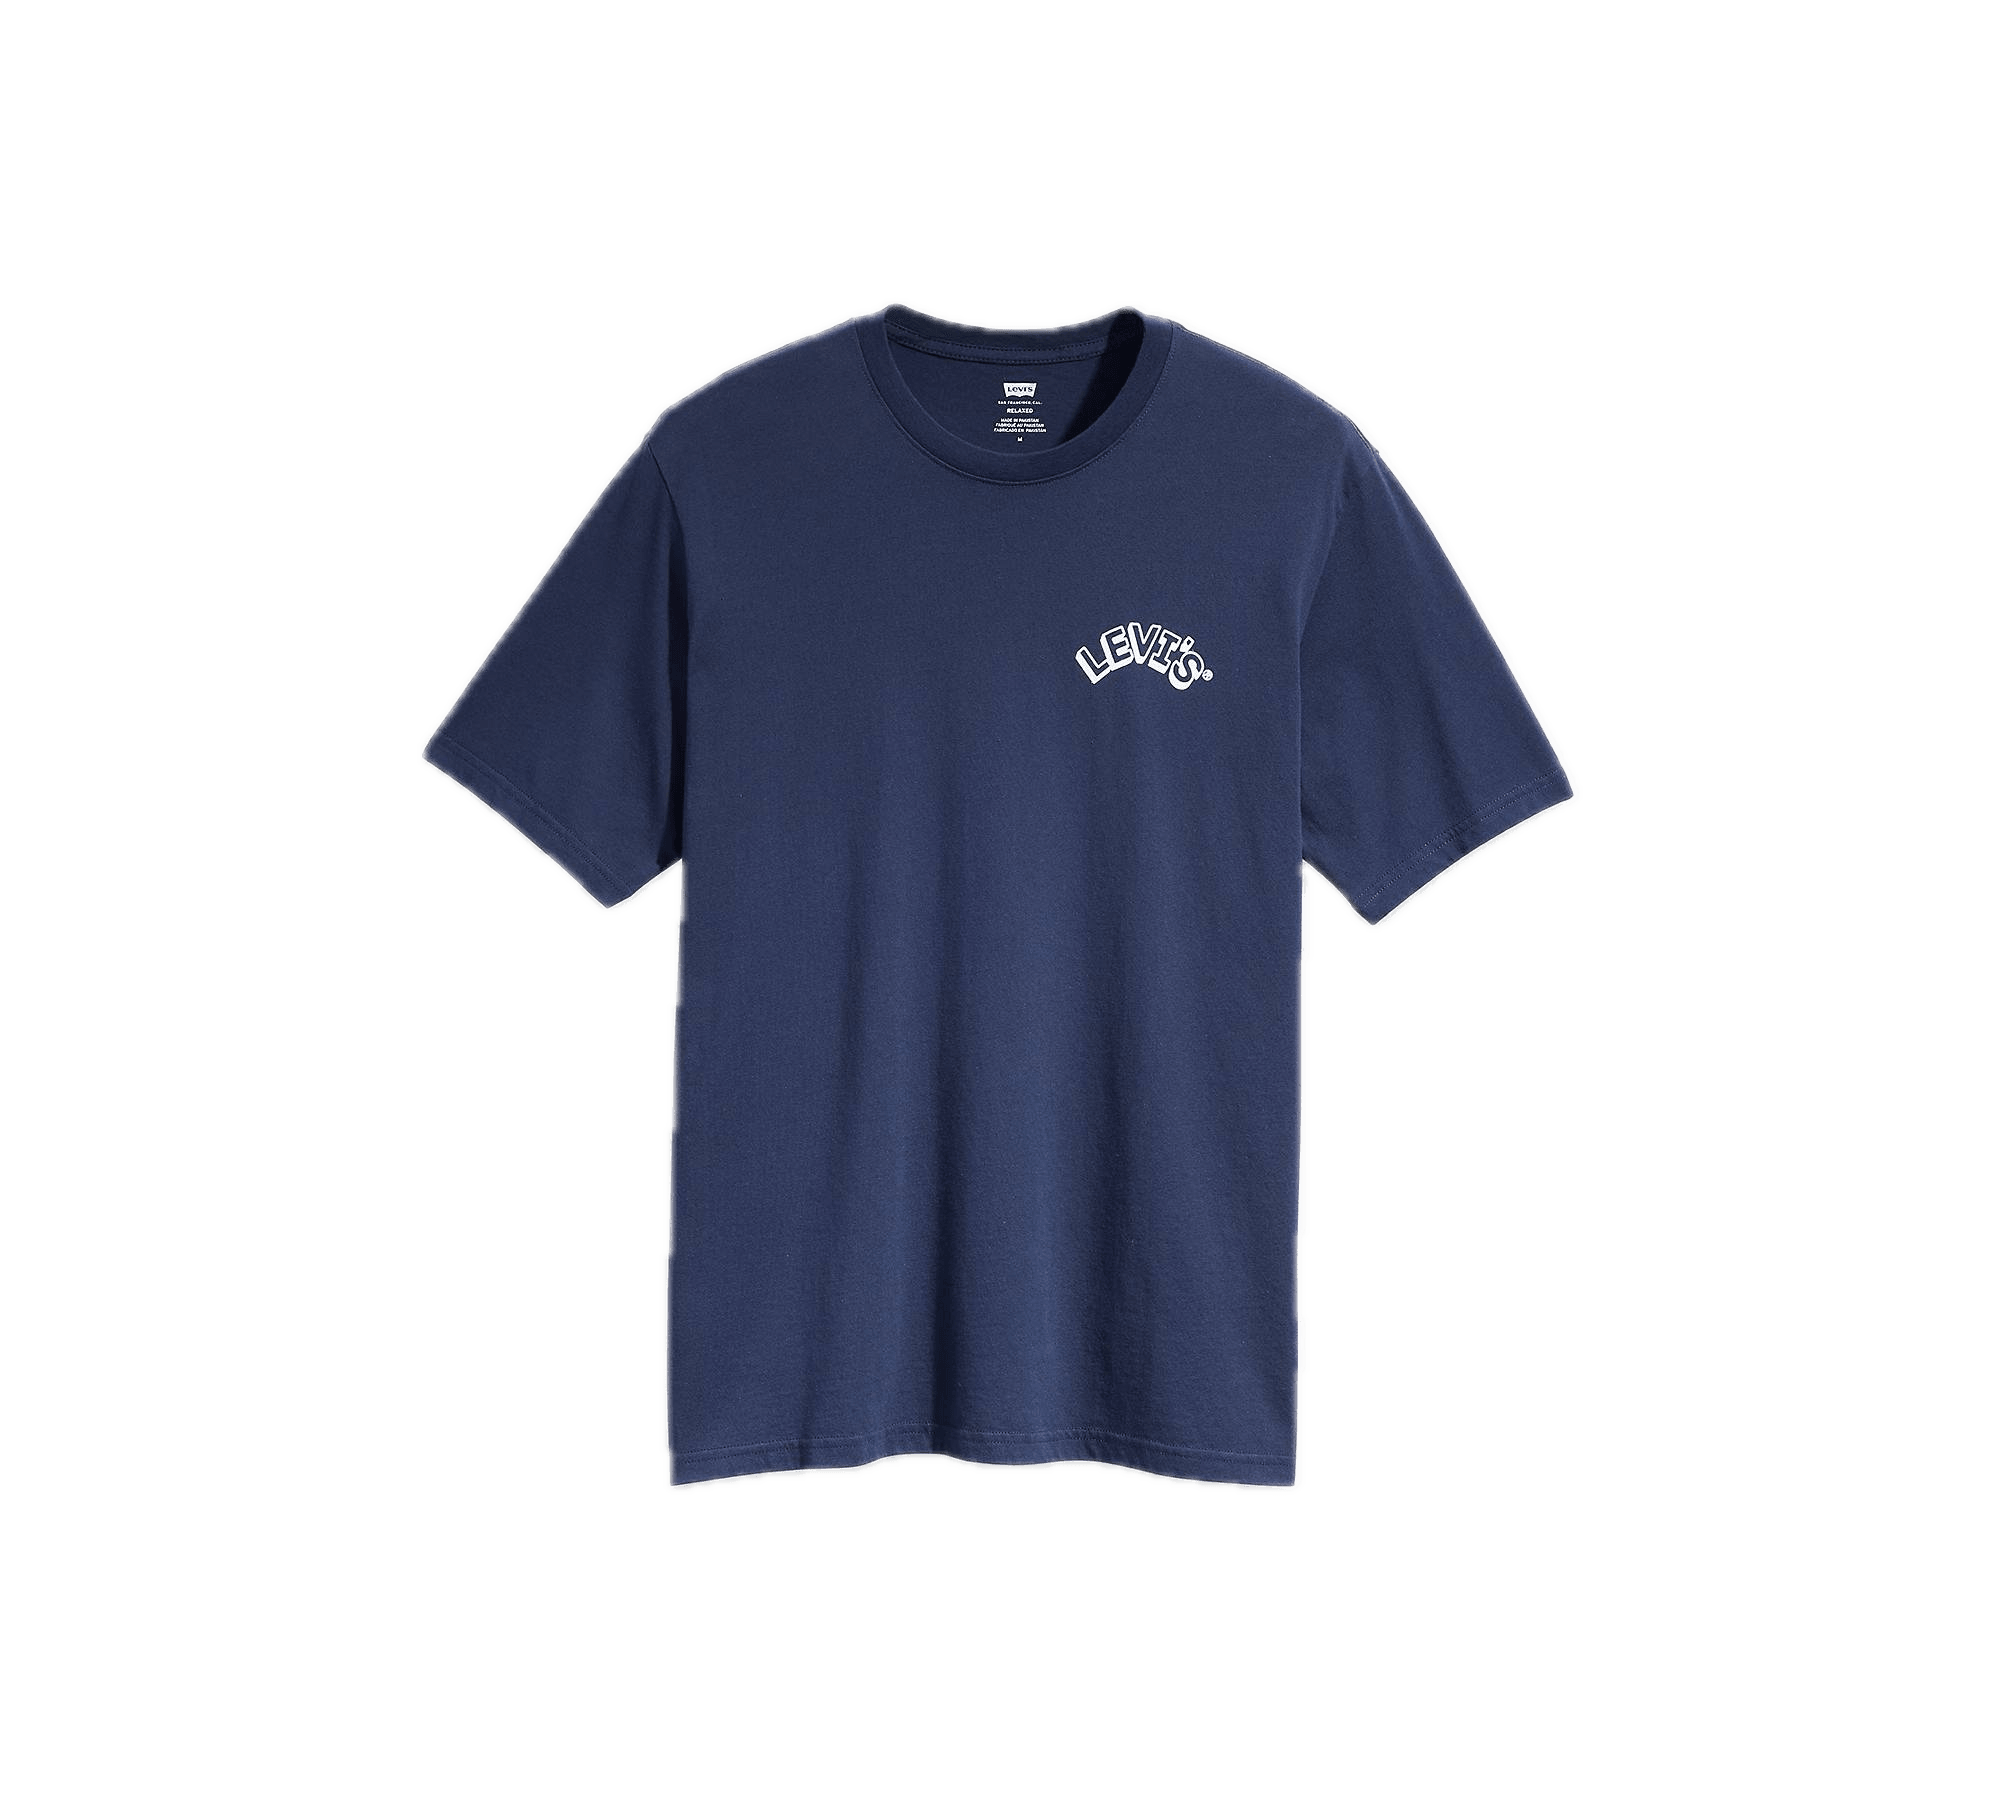 Camiseta Levi's® Arched Headline Naval Academy Azul - ECRU